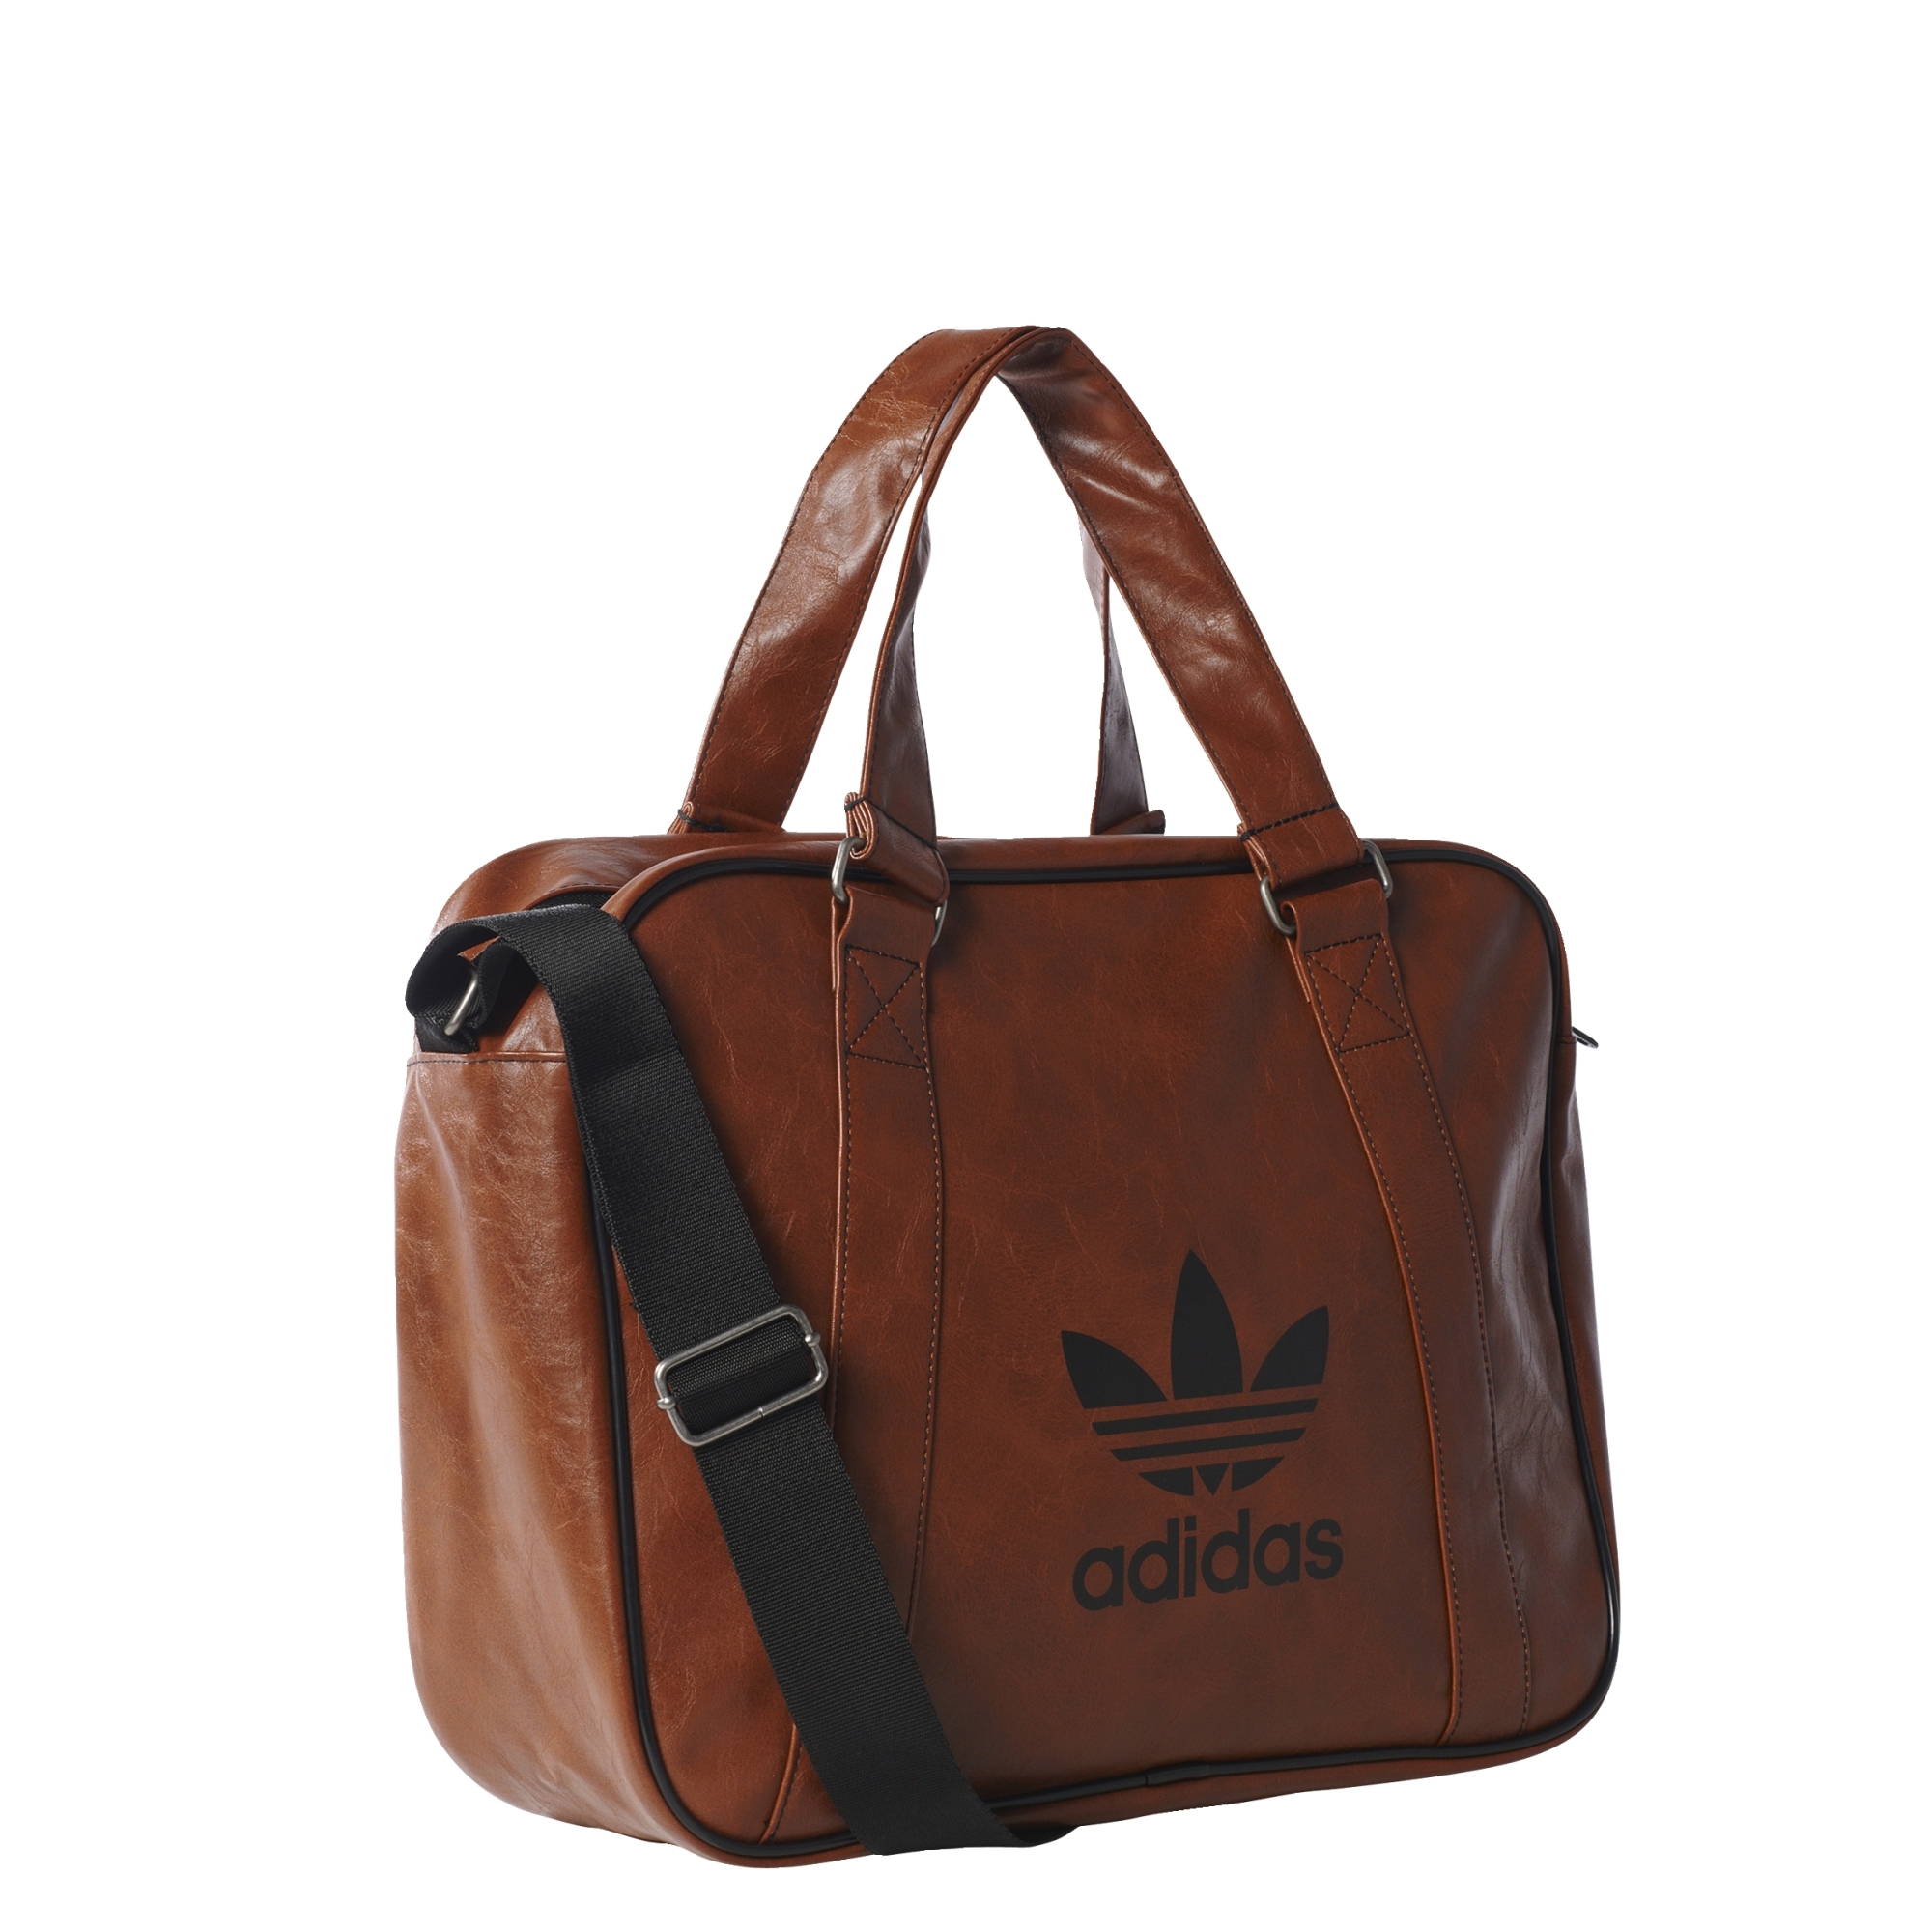 Adidas Originals Vintage Bag (dust rust)